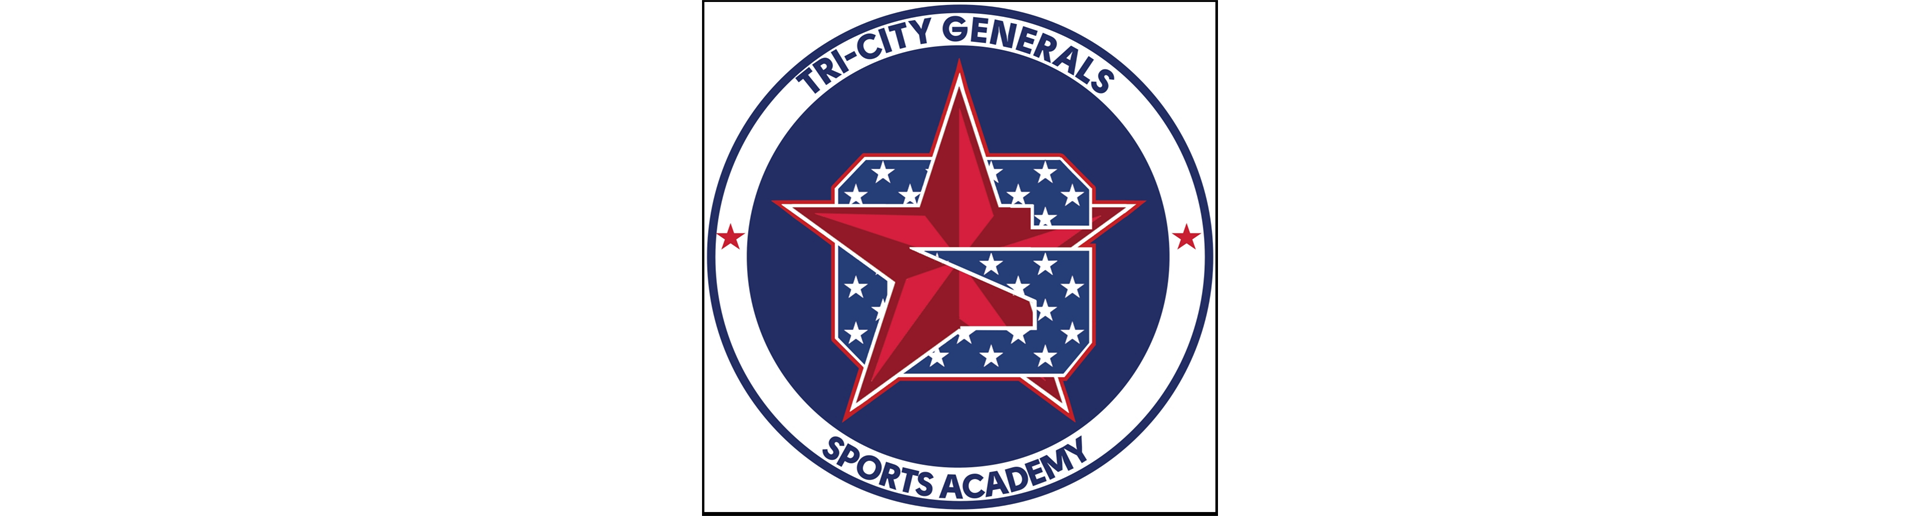 Tri-City Generals - New GAD8 Affiliate